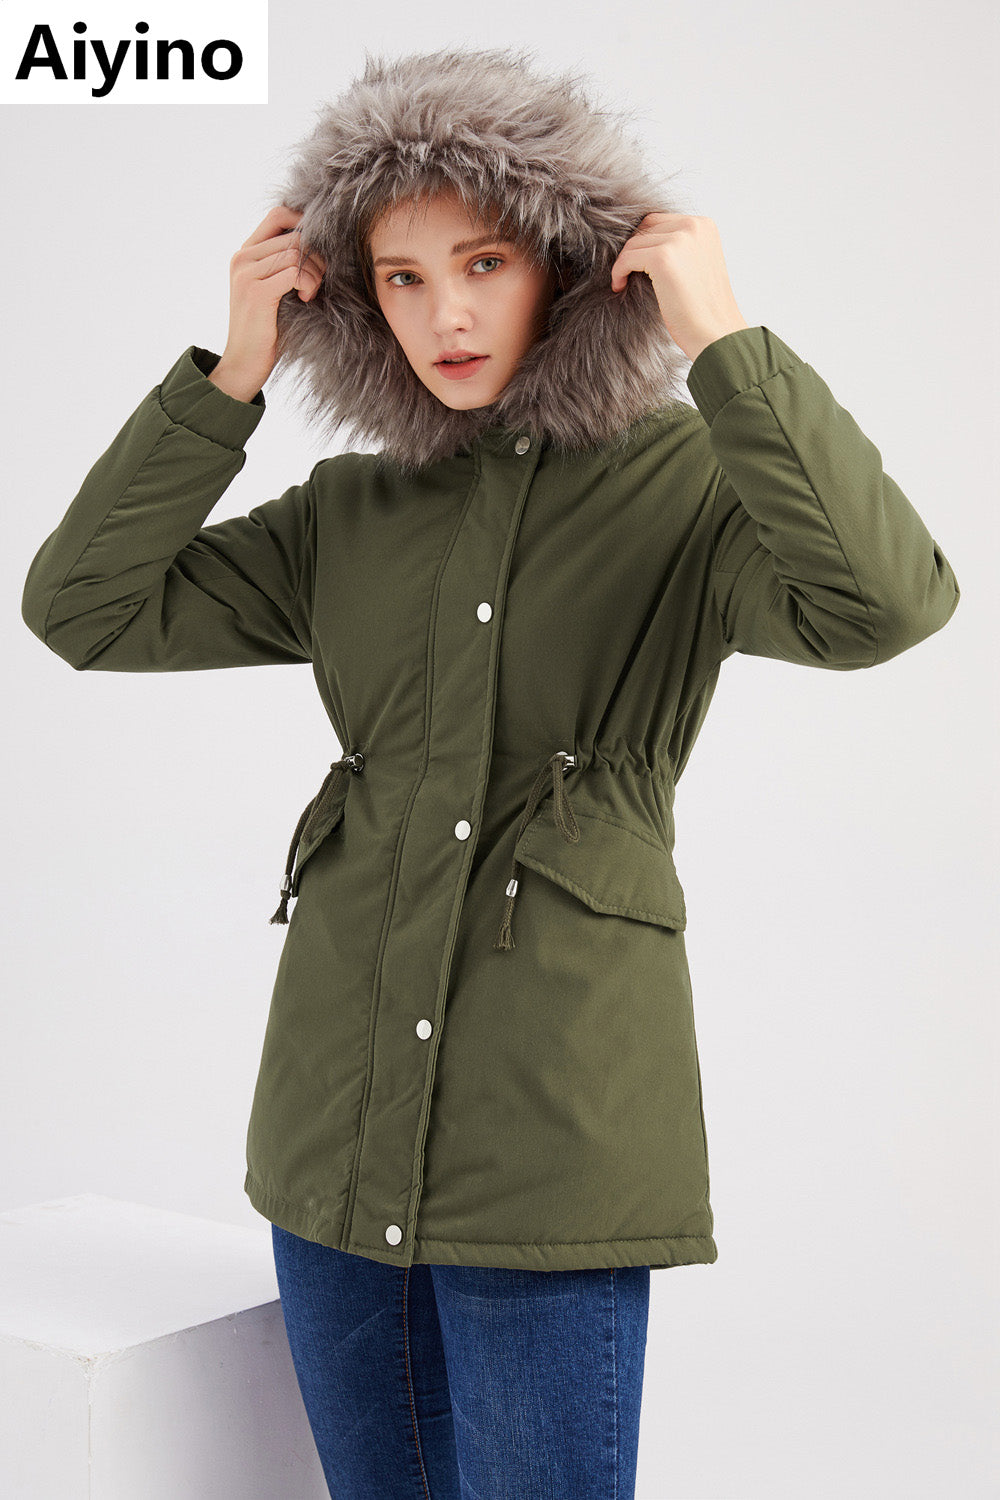 Aiyino Womens Winter Coat Thicken Puffer Jacket Warm FLeece Lined Parka